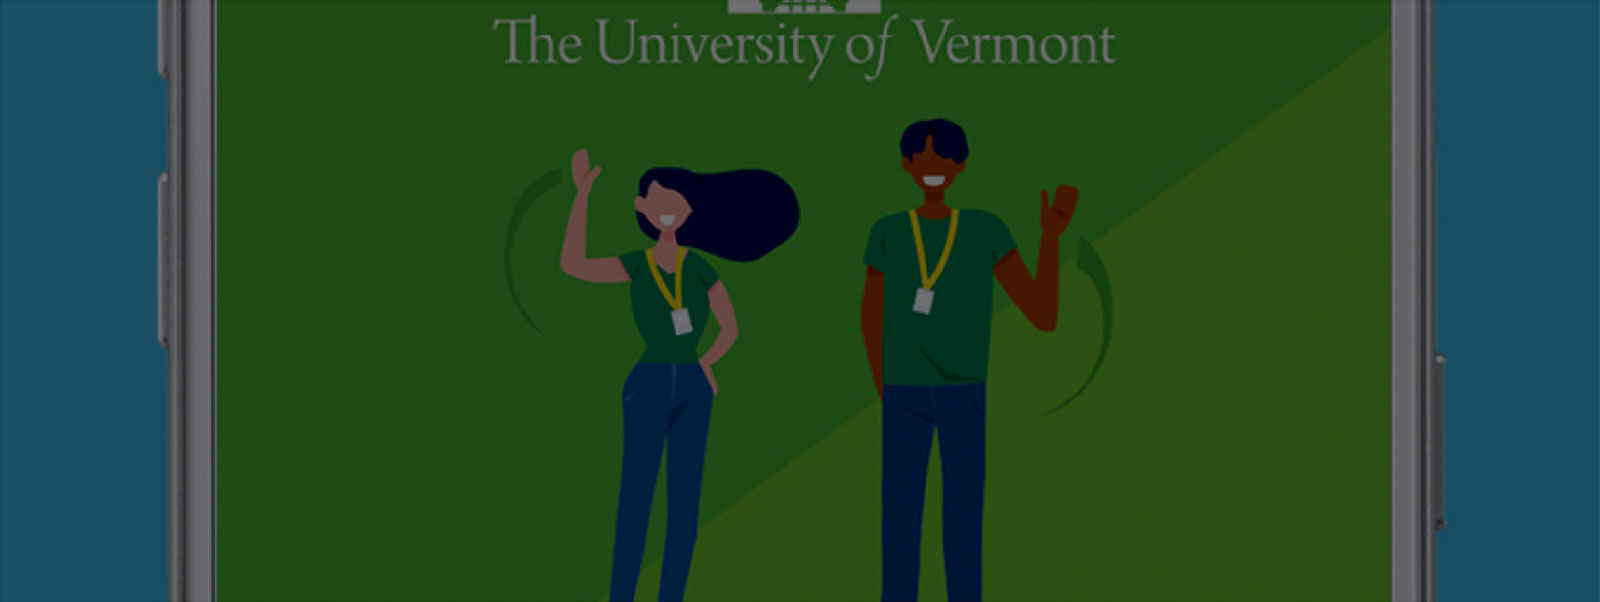 University of Vermont - Banner